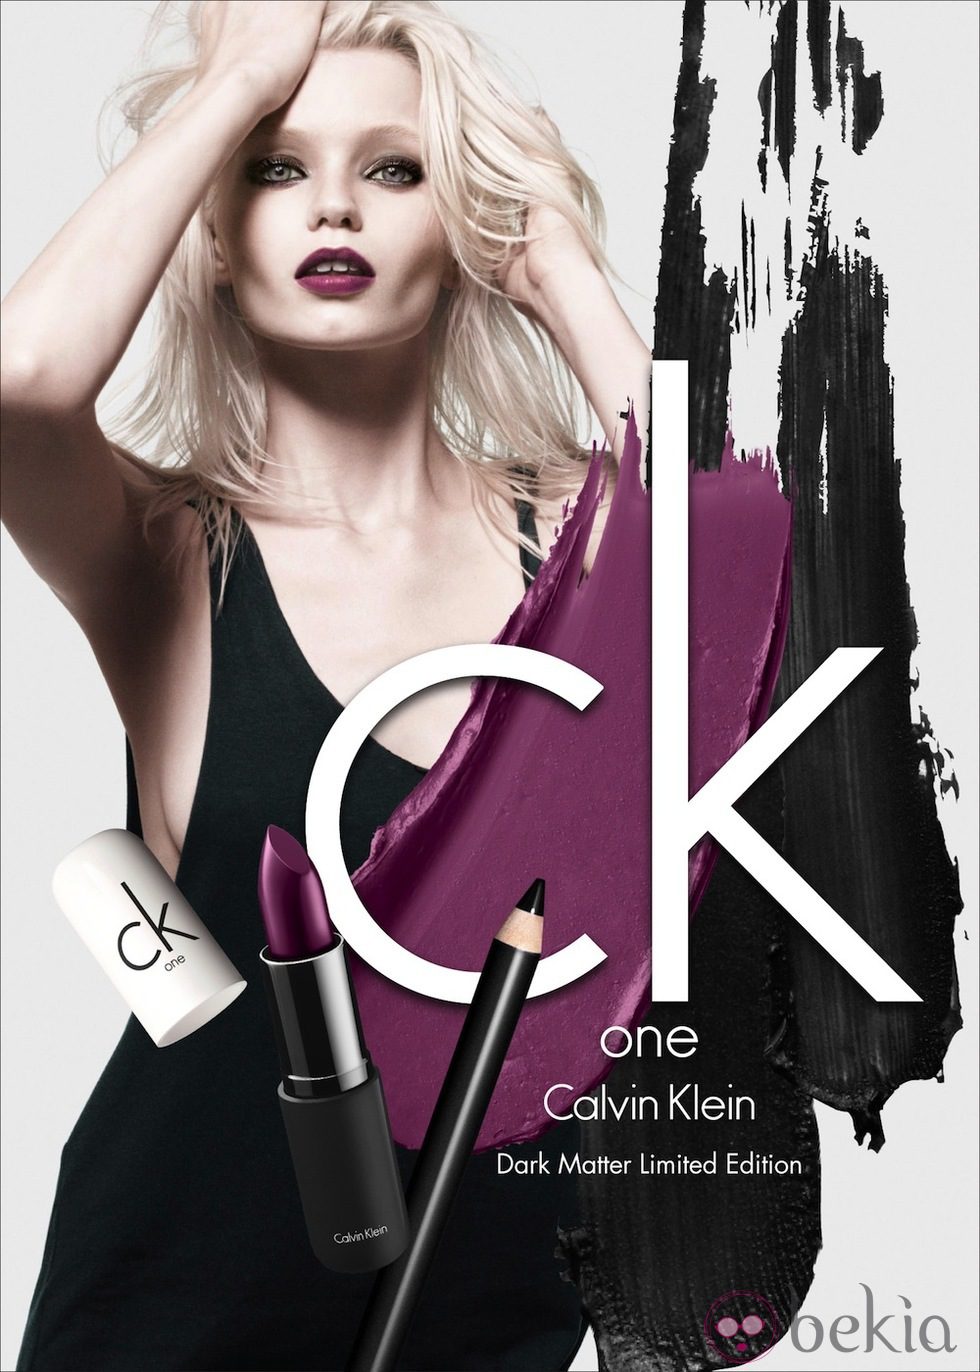 CK One Dark Matter, la colección otoño 2012 de maquillaje Calvin Klein